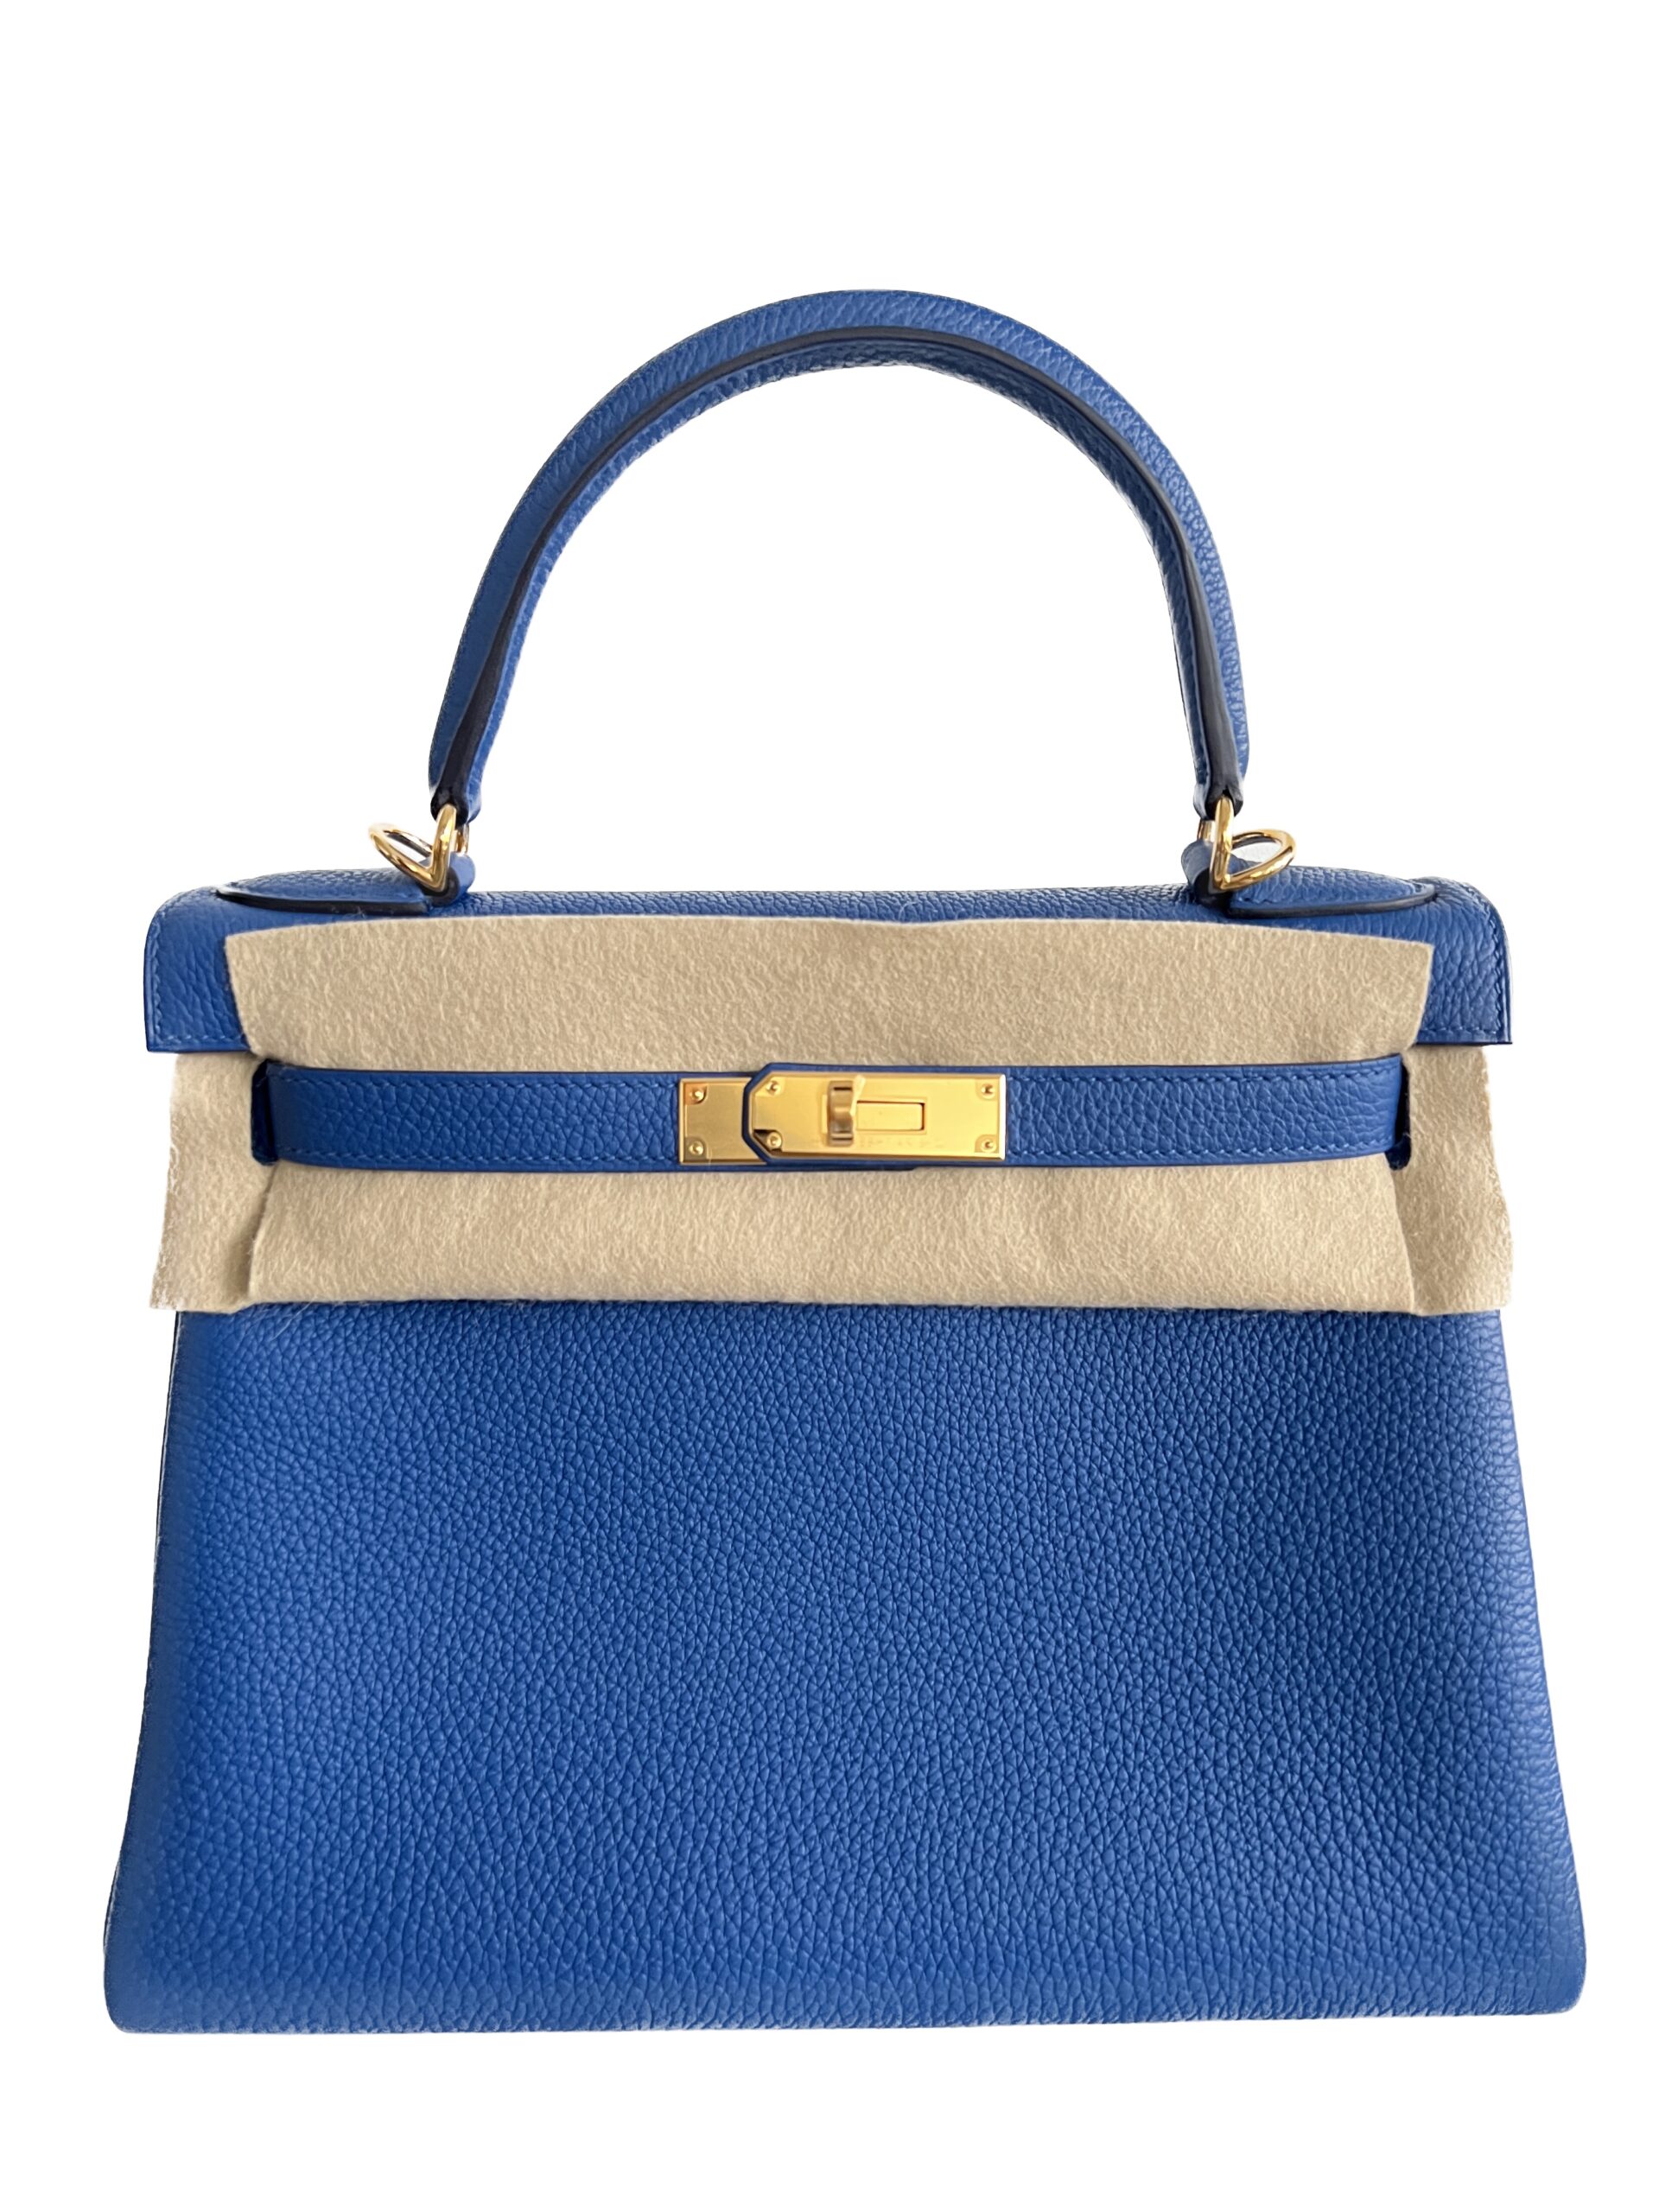 Hermès Kelly 28 Blue Royal Togo With Gold Hardware